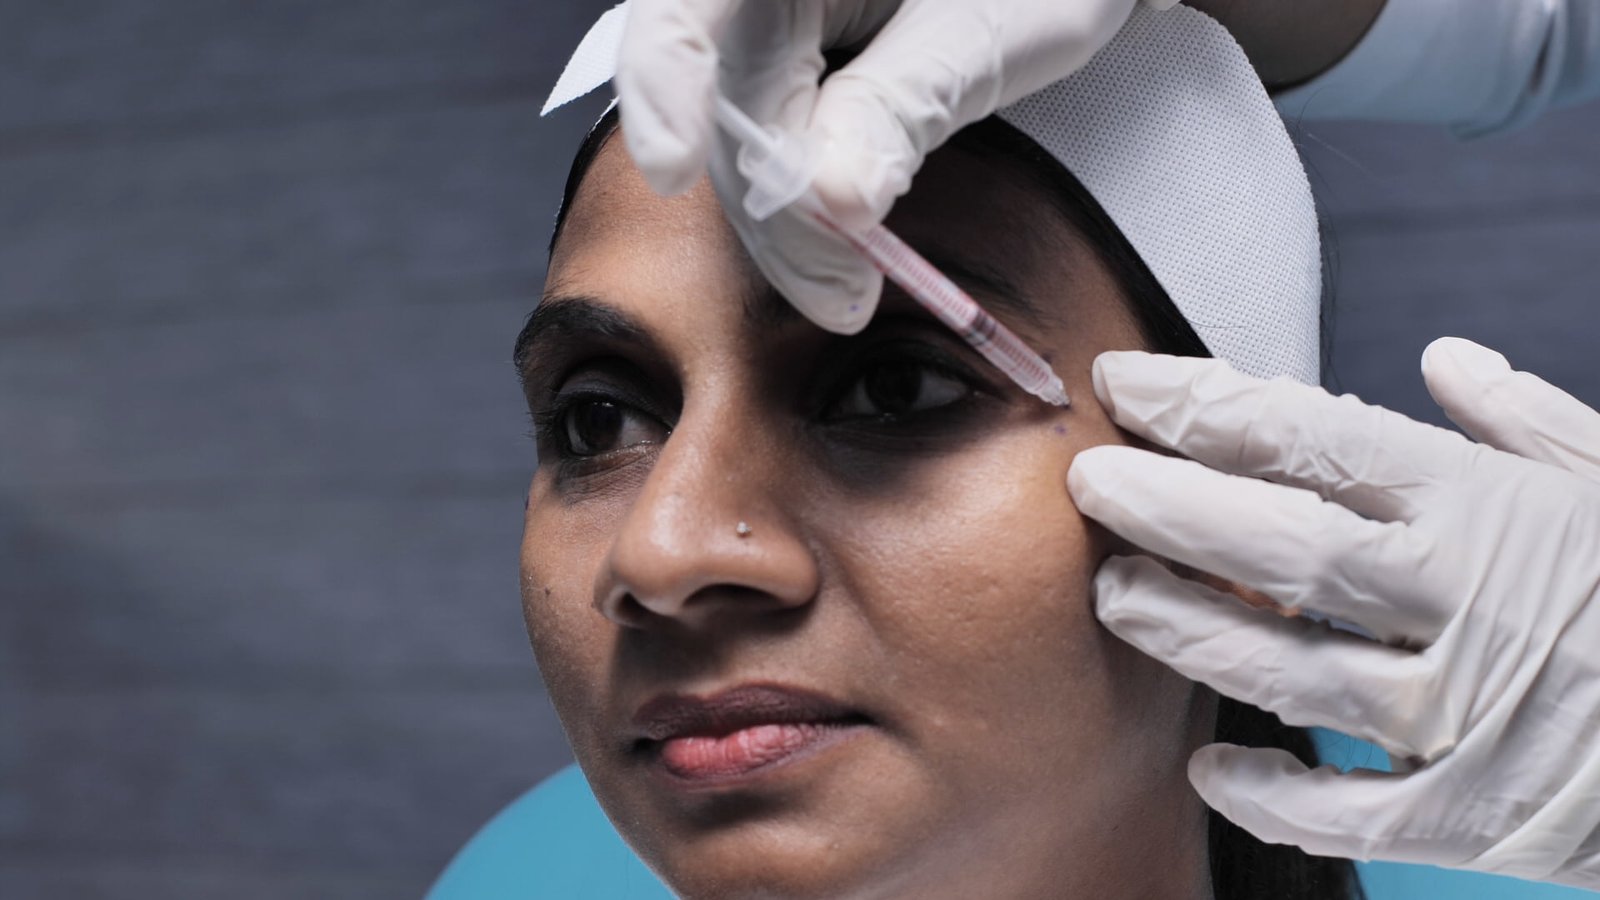 Woman receiving BOTOX treatment at DermaVue clinic